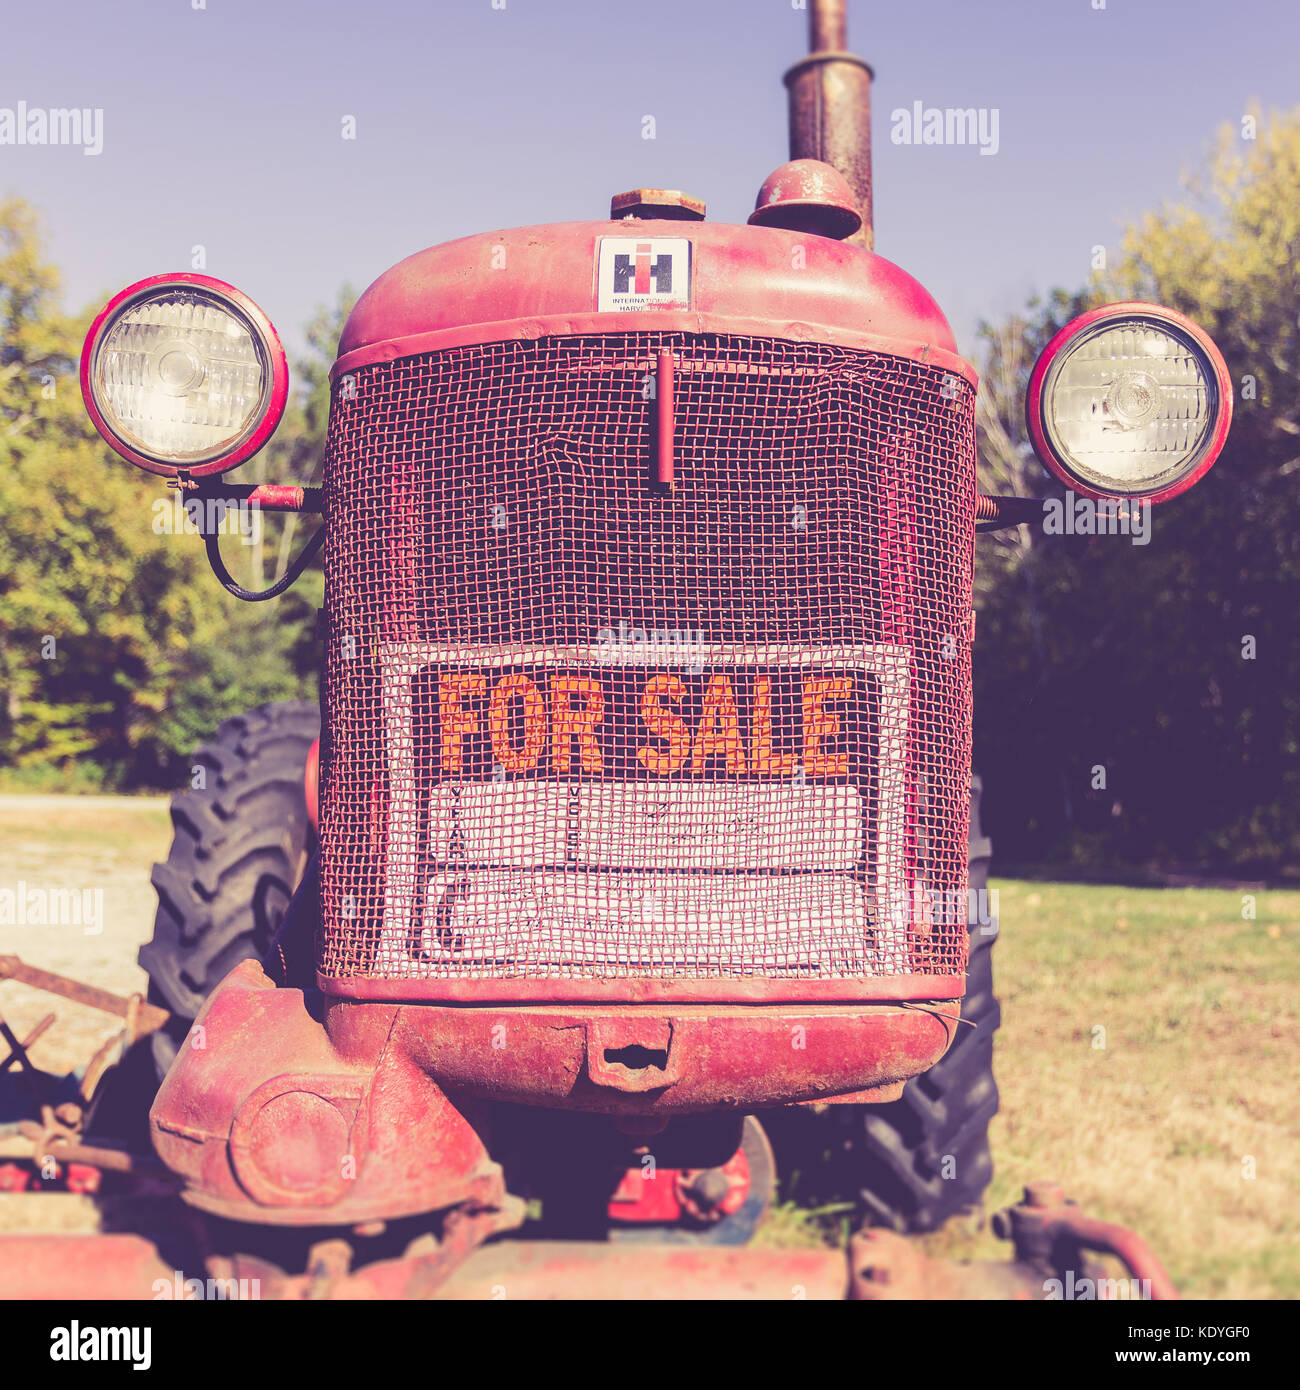 International Harvester Farmall Cub Vintage Tractor. Stock Photo